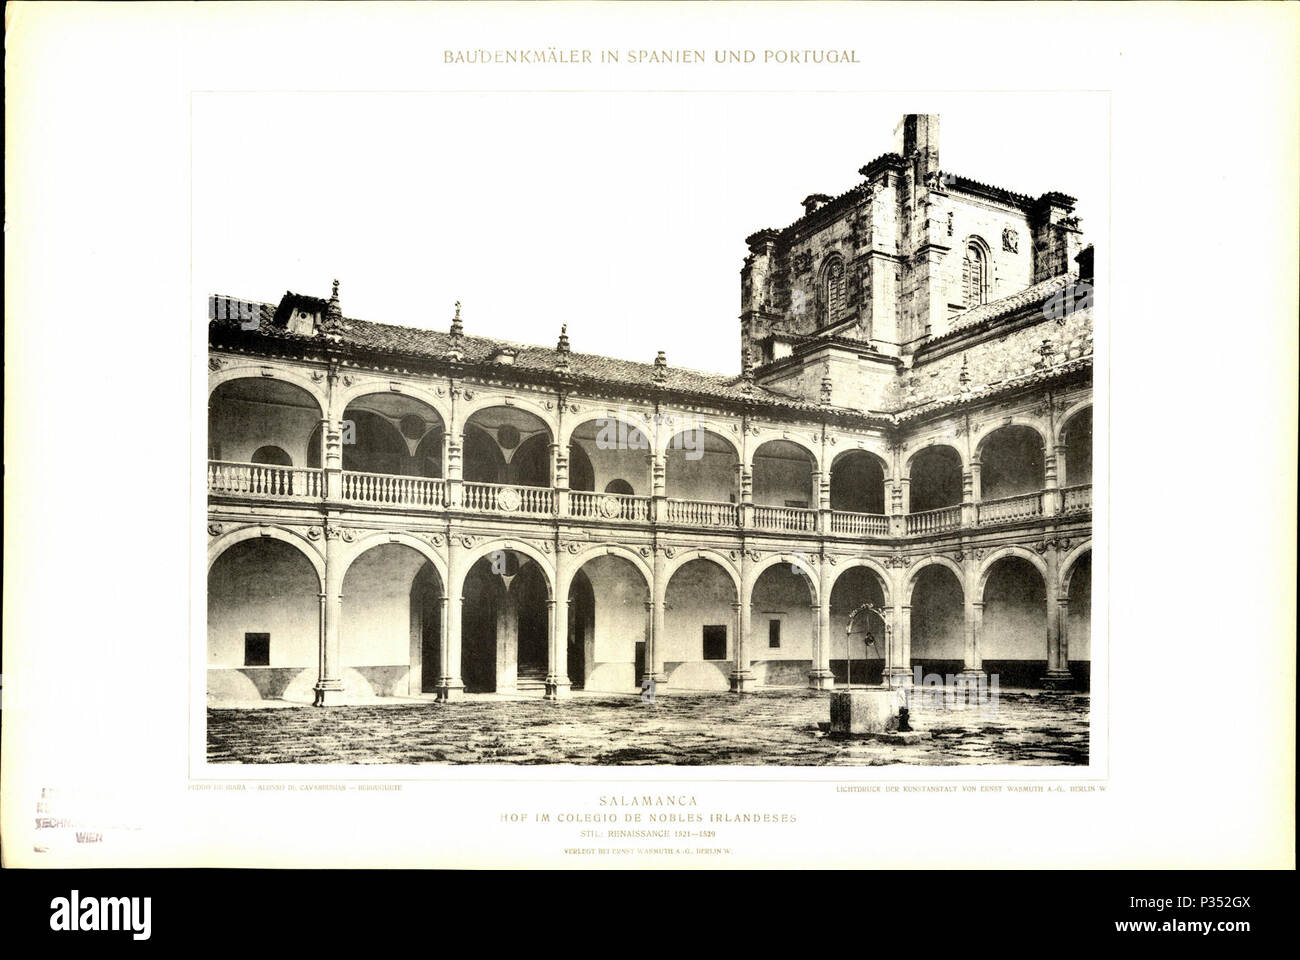 091 Salamanca-Hof im Colegio de Nobles Irlandeses Stockfoto